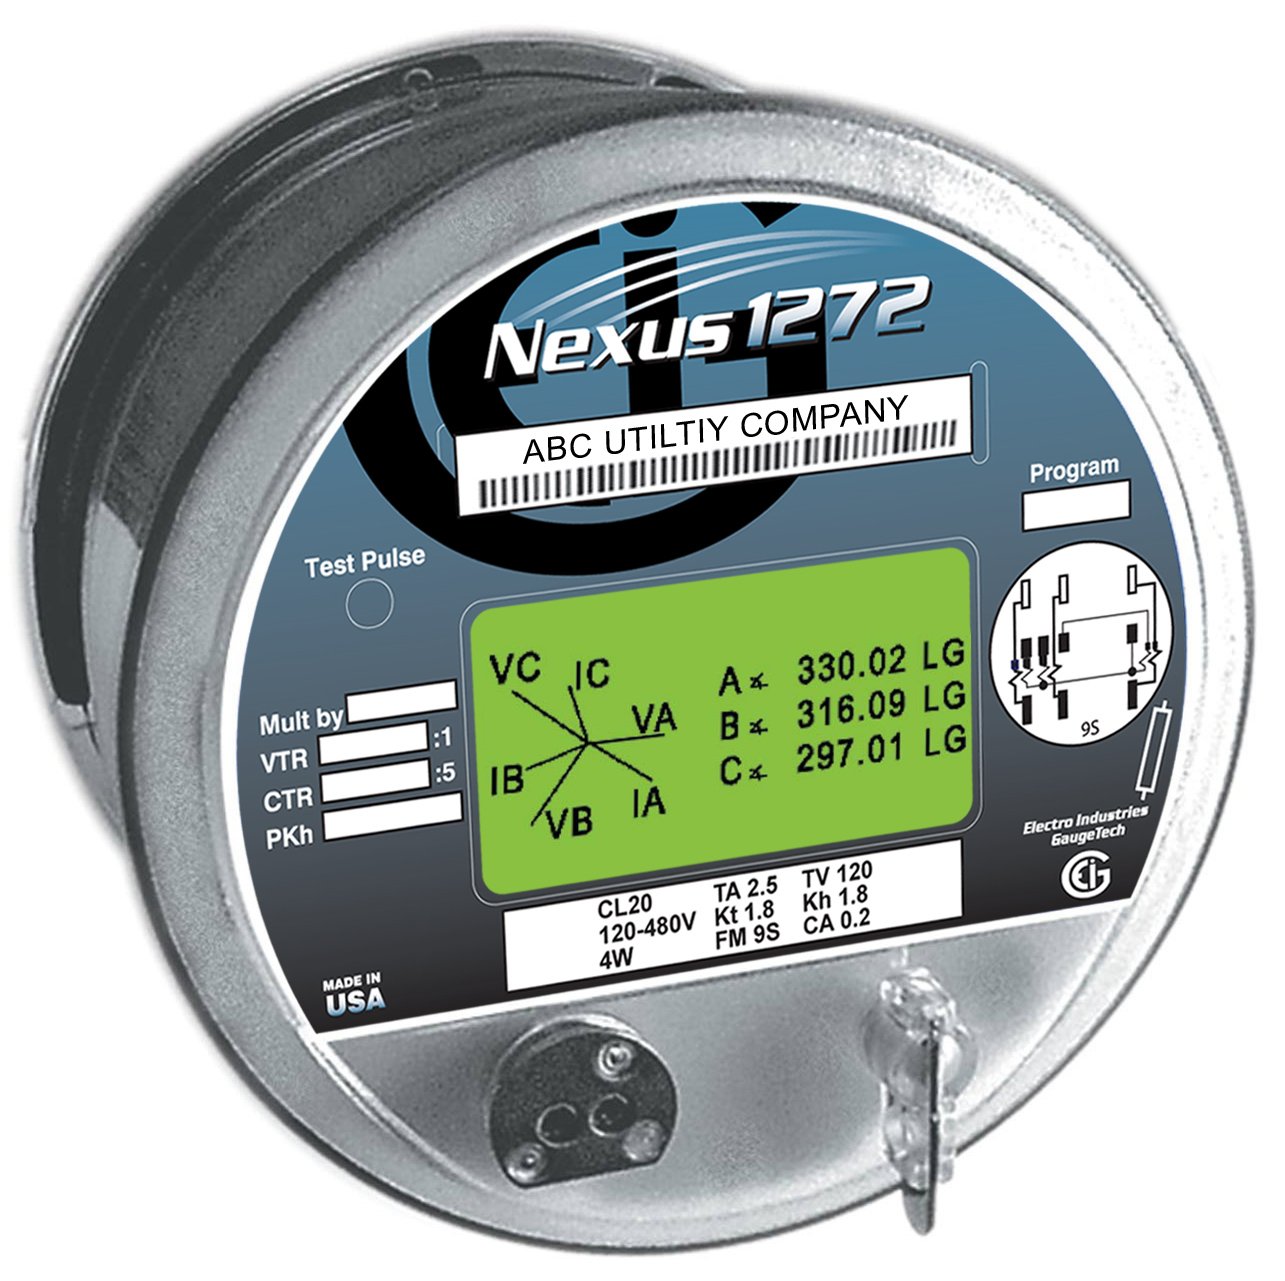 Nexus 1272 High-Performance Revenue Meter